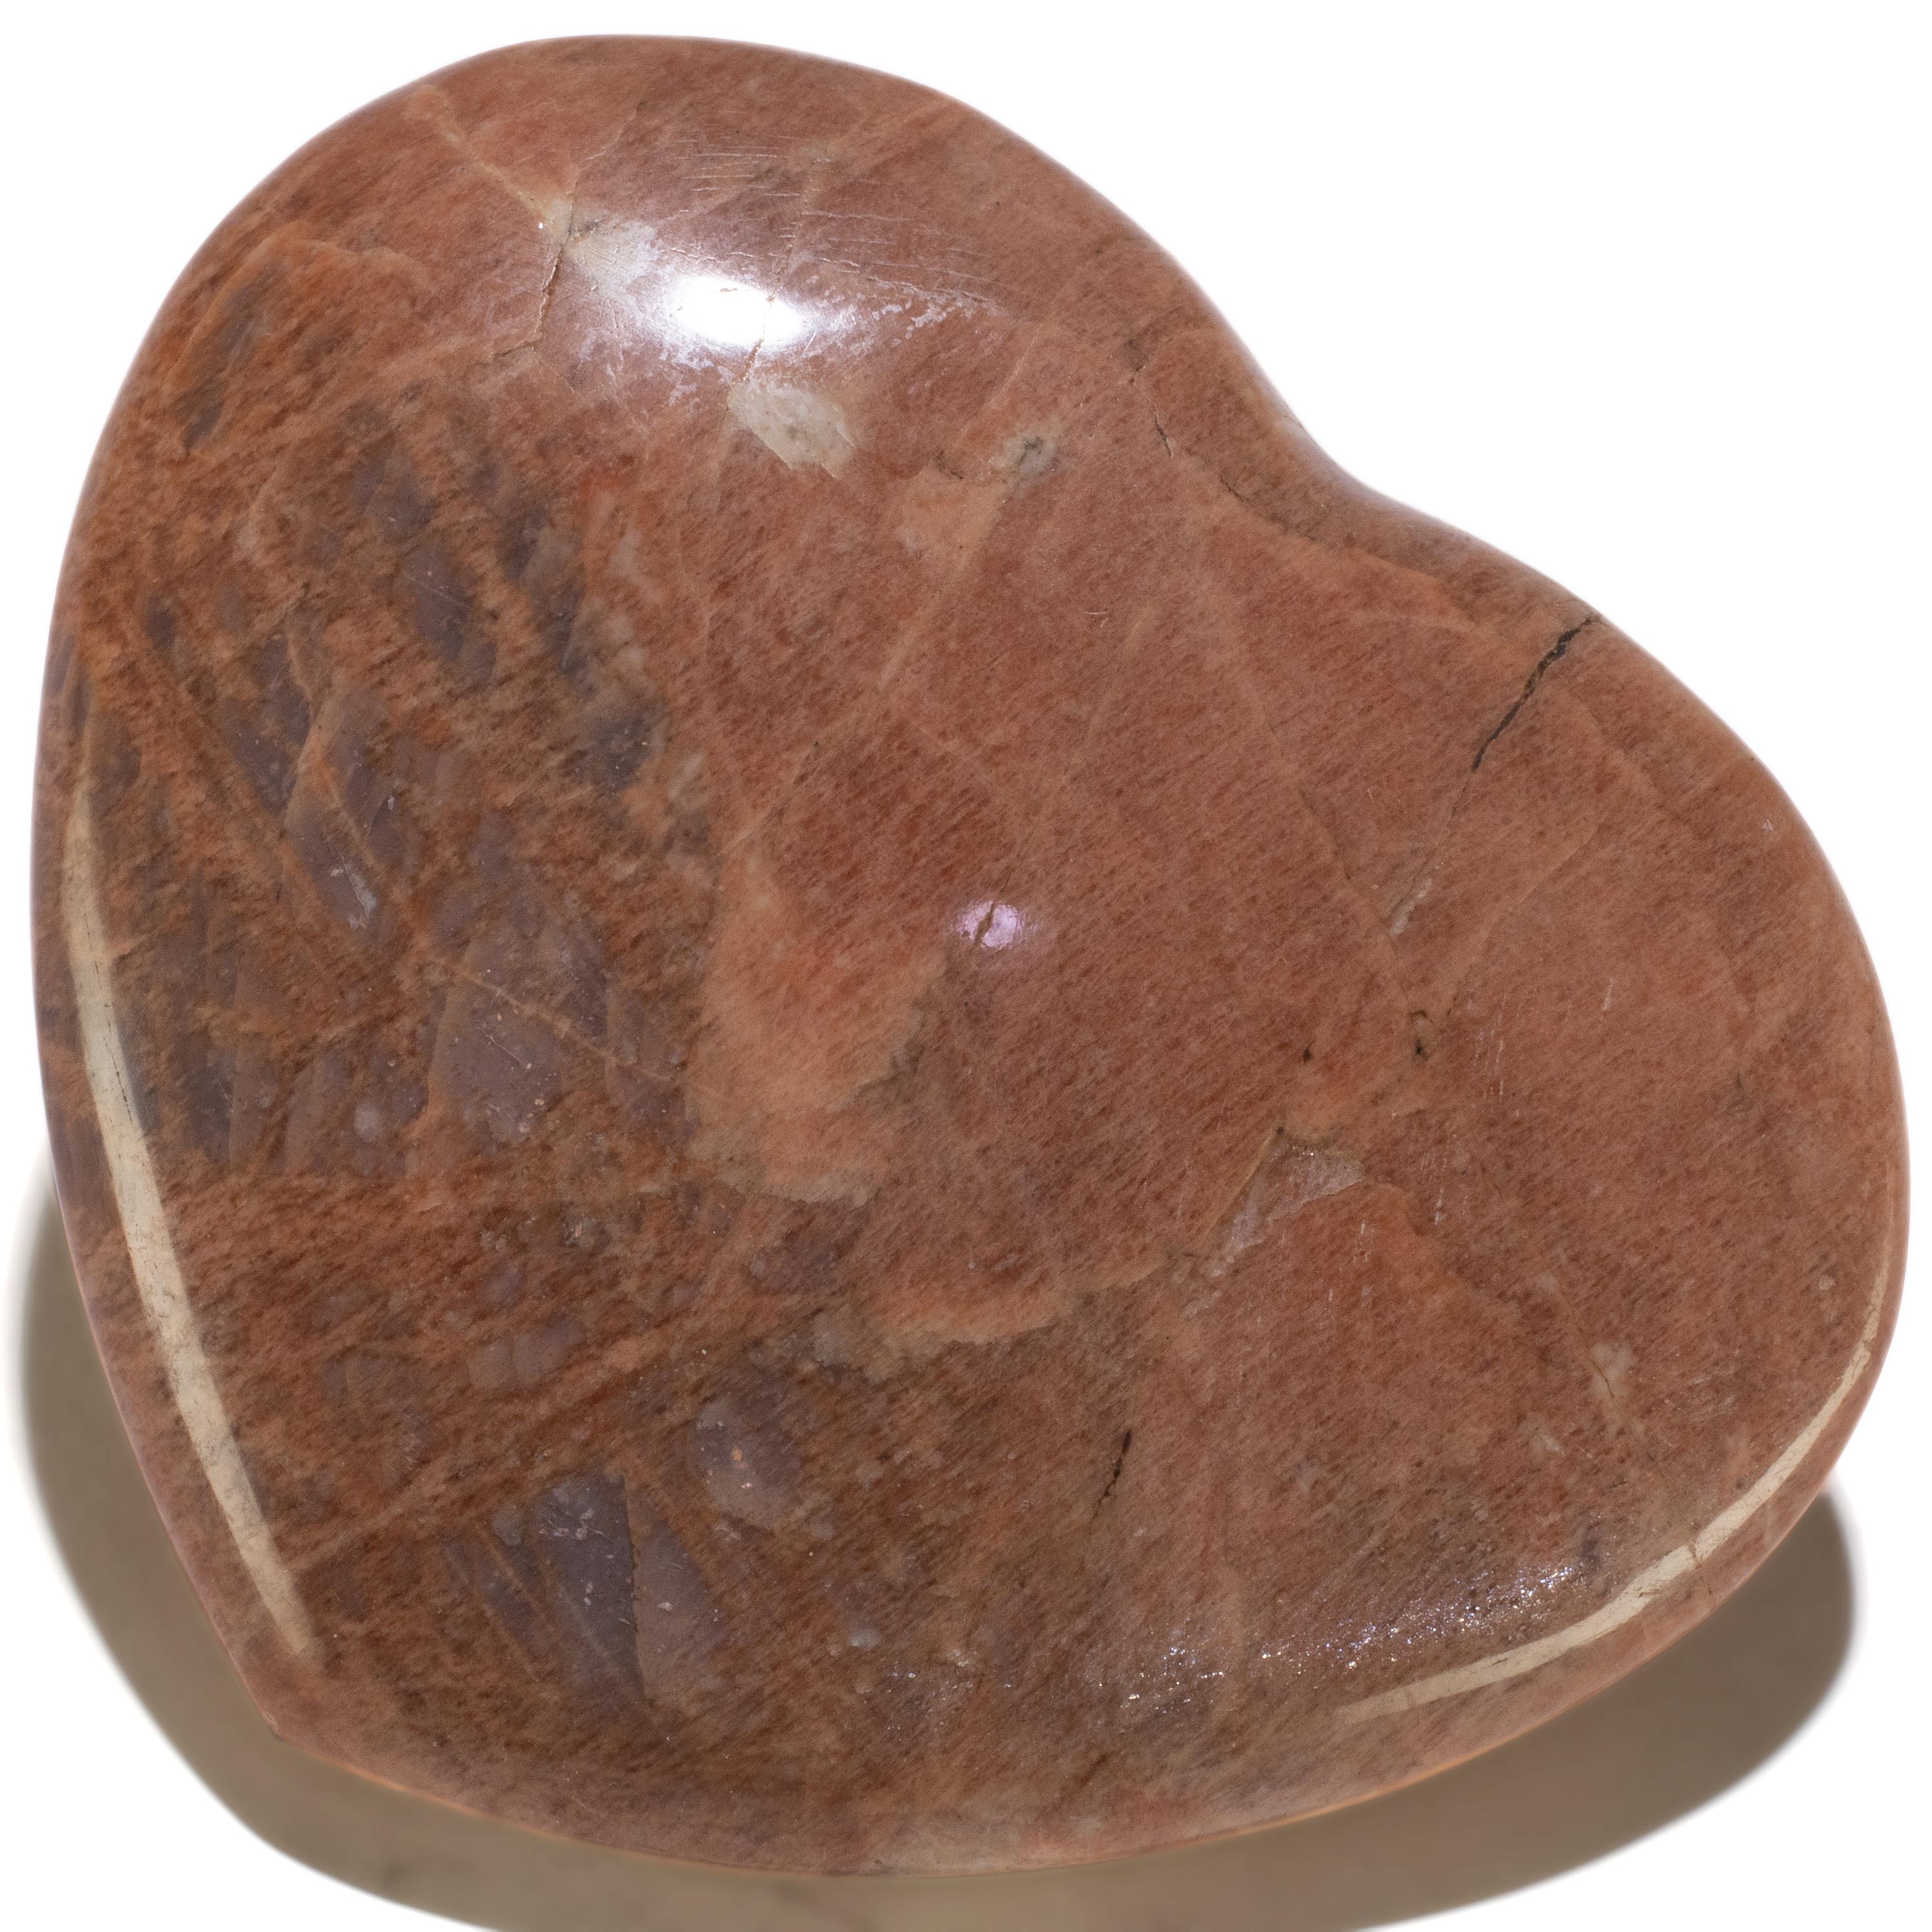 KALIFANO Peach Moonstone Peach Moonstone Gemstone Heart Carving 800g / 5in. GH800-PM